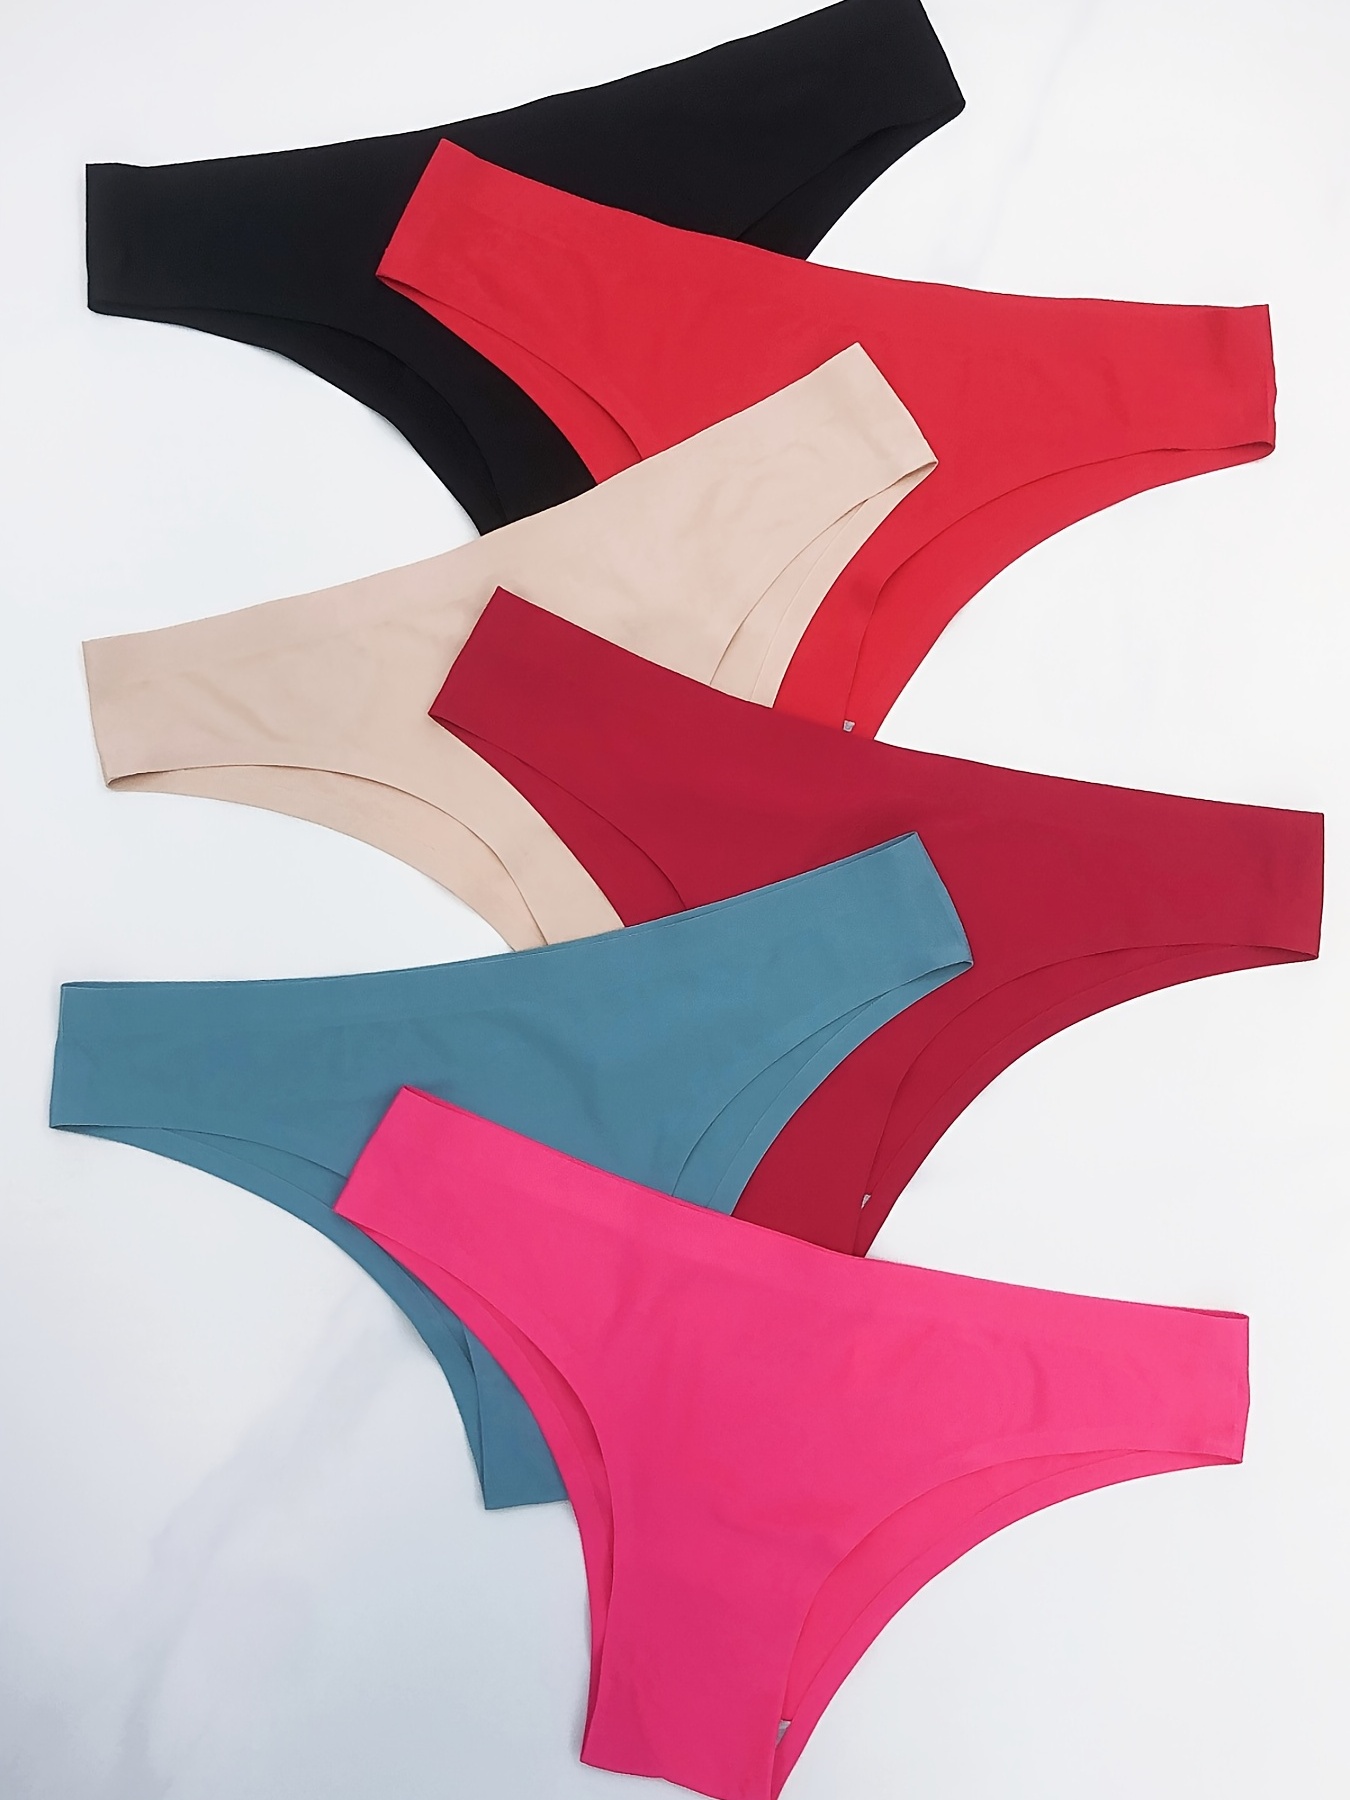 Seamless Thong Women Low Rise Seamless Panties Underwear (Color